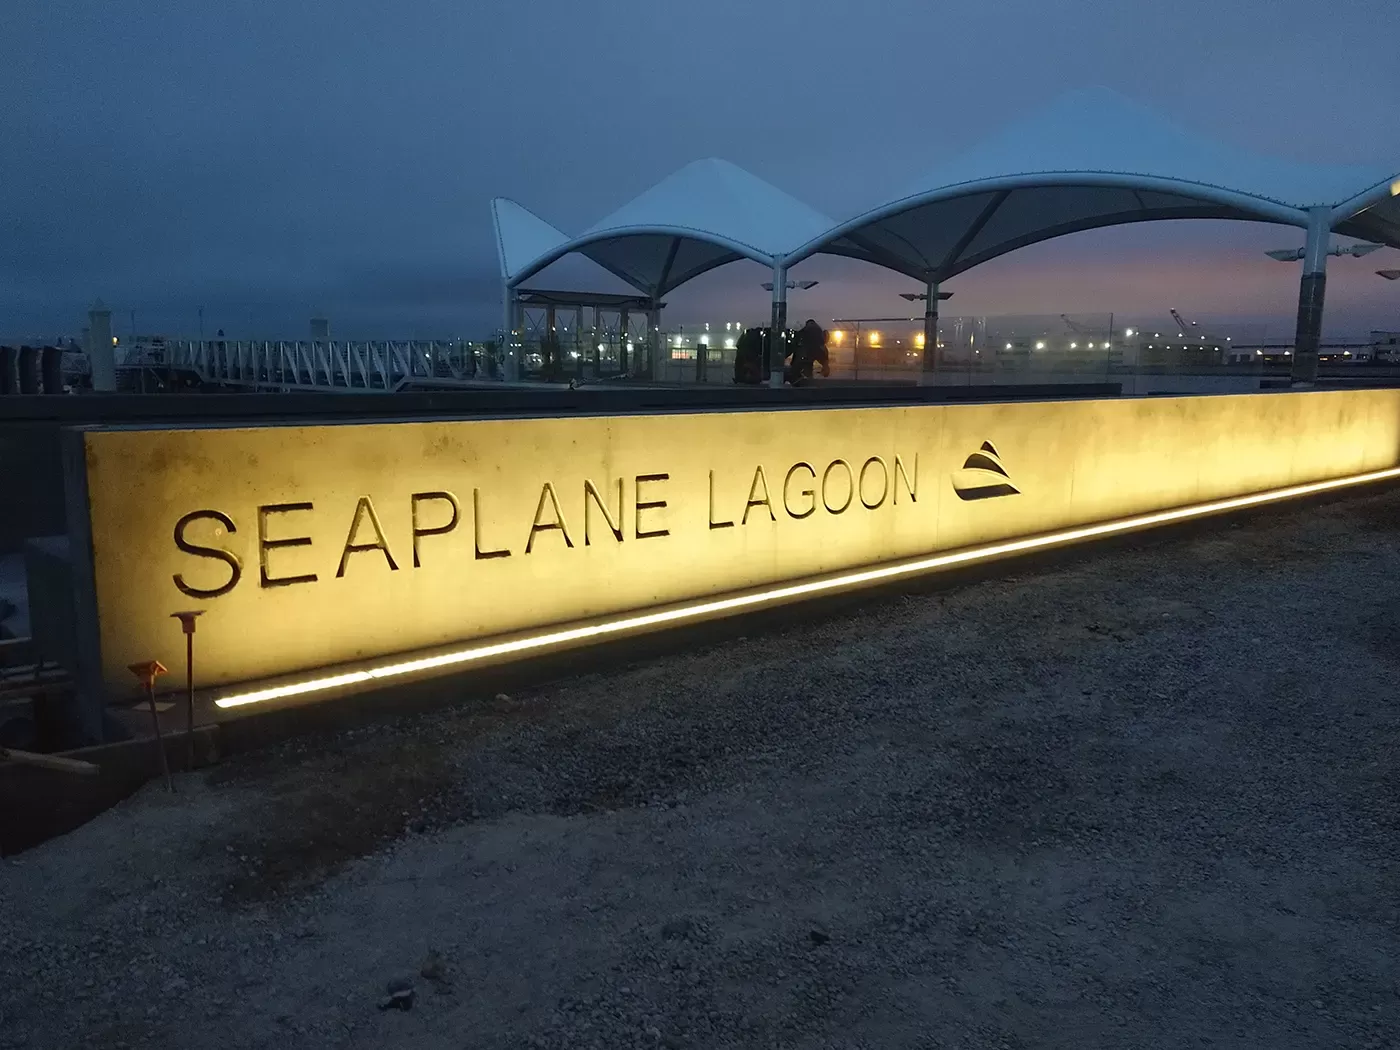 Seaplane Lagoon Signage